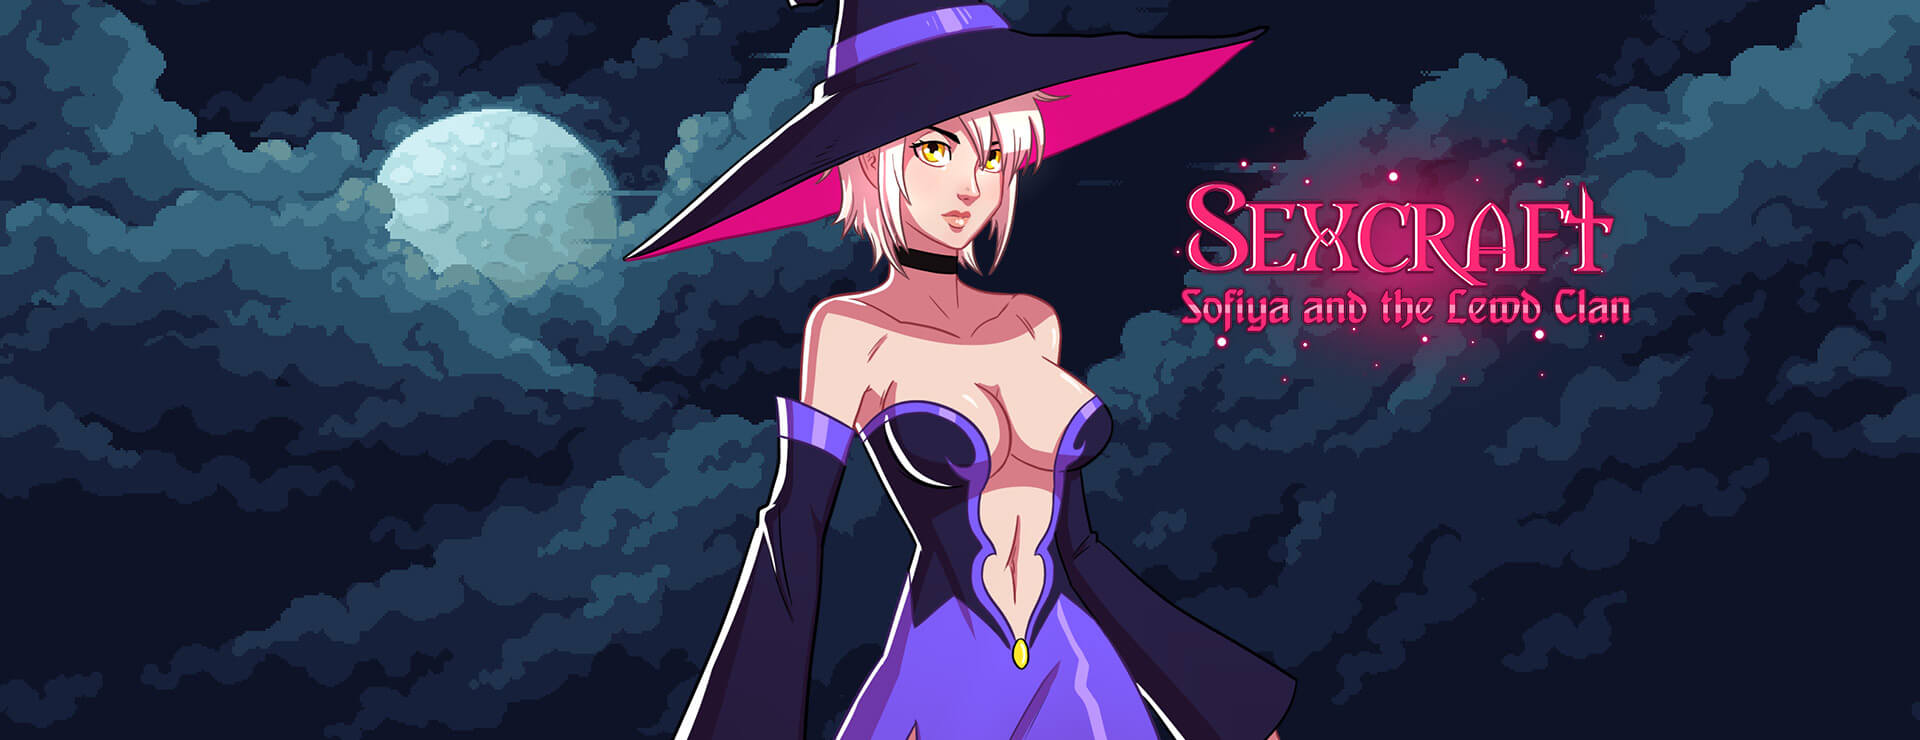 Sexcraft - Sofiya and the Lewd Clan - アクションアドベンチャー ゲーム